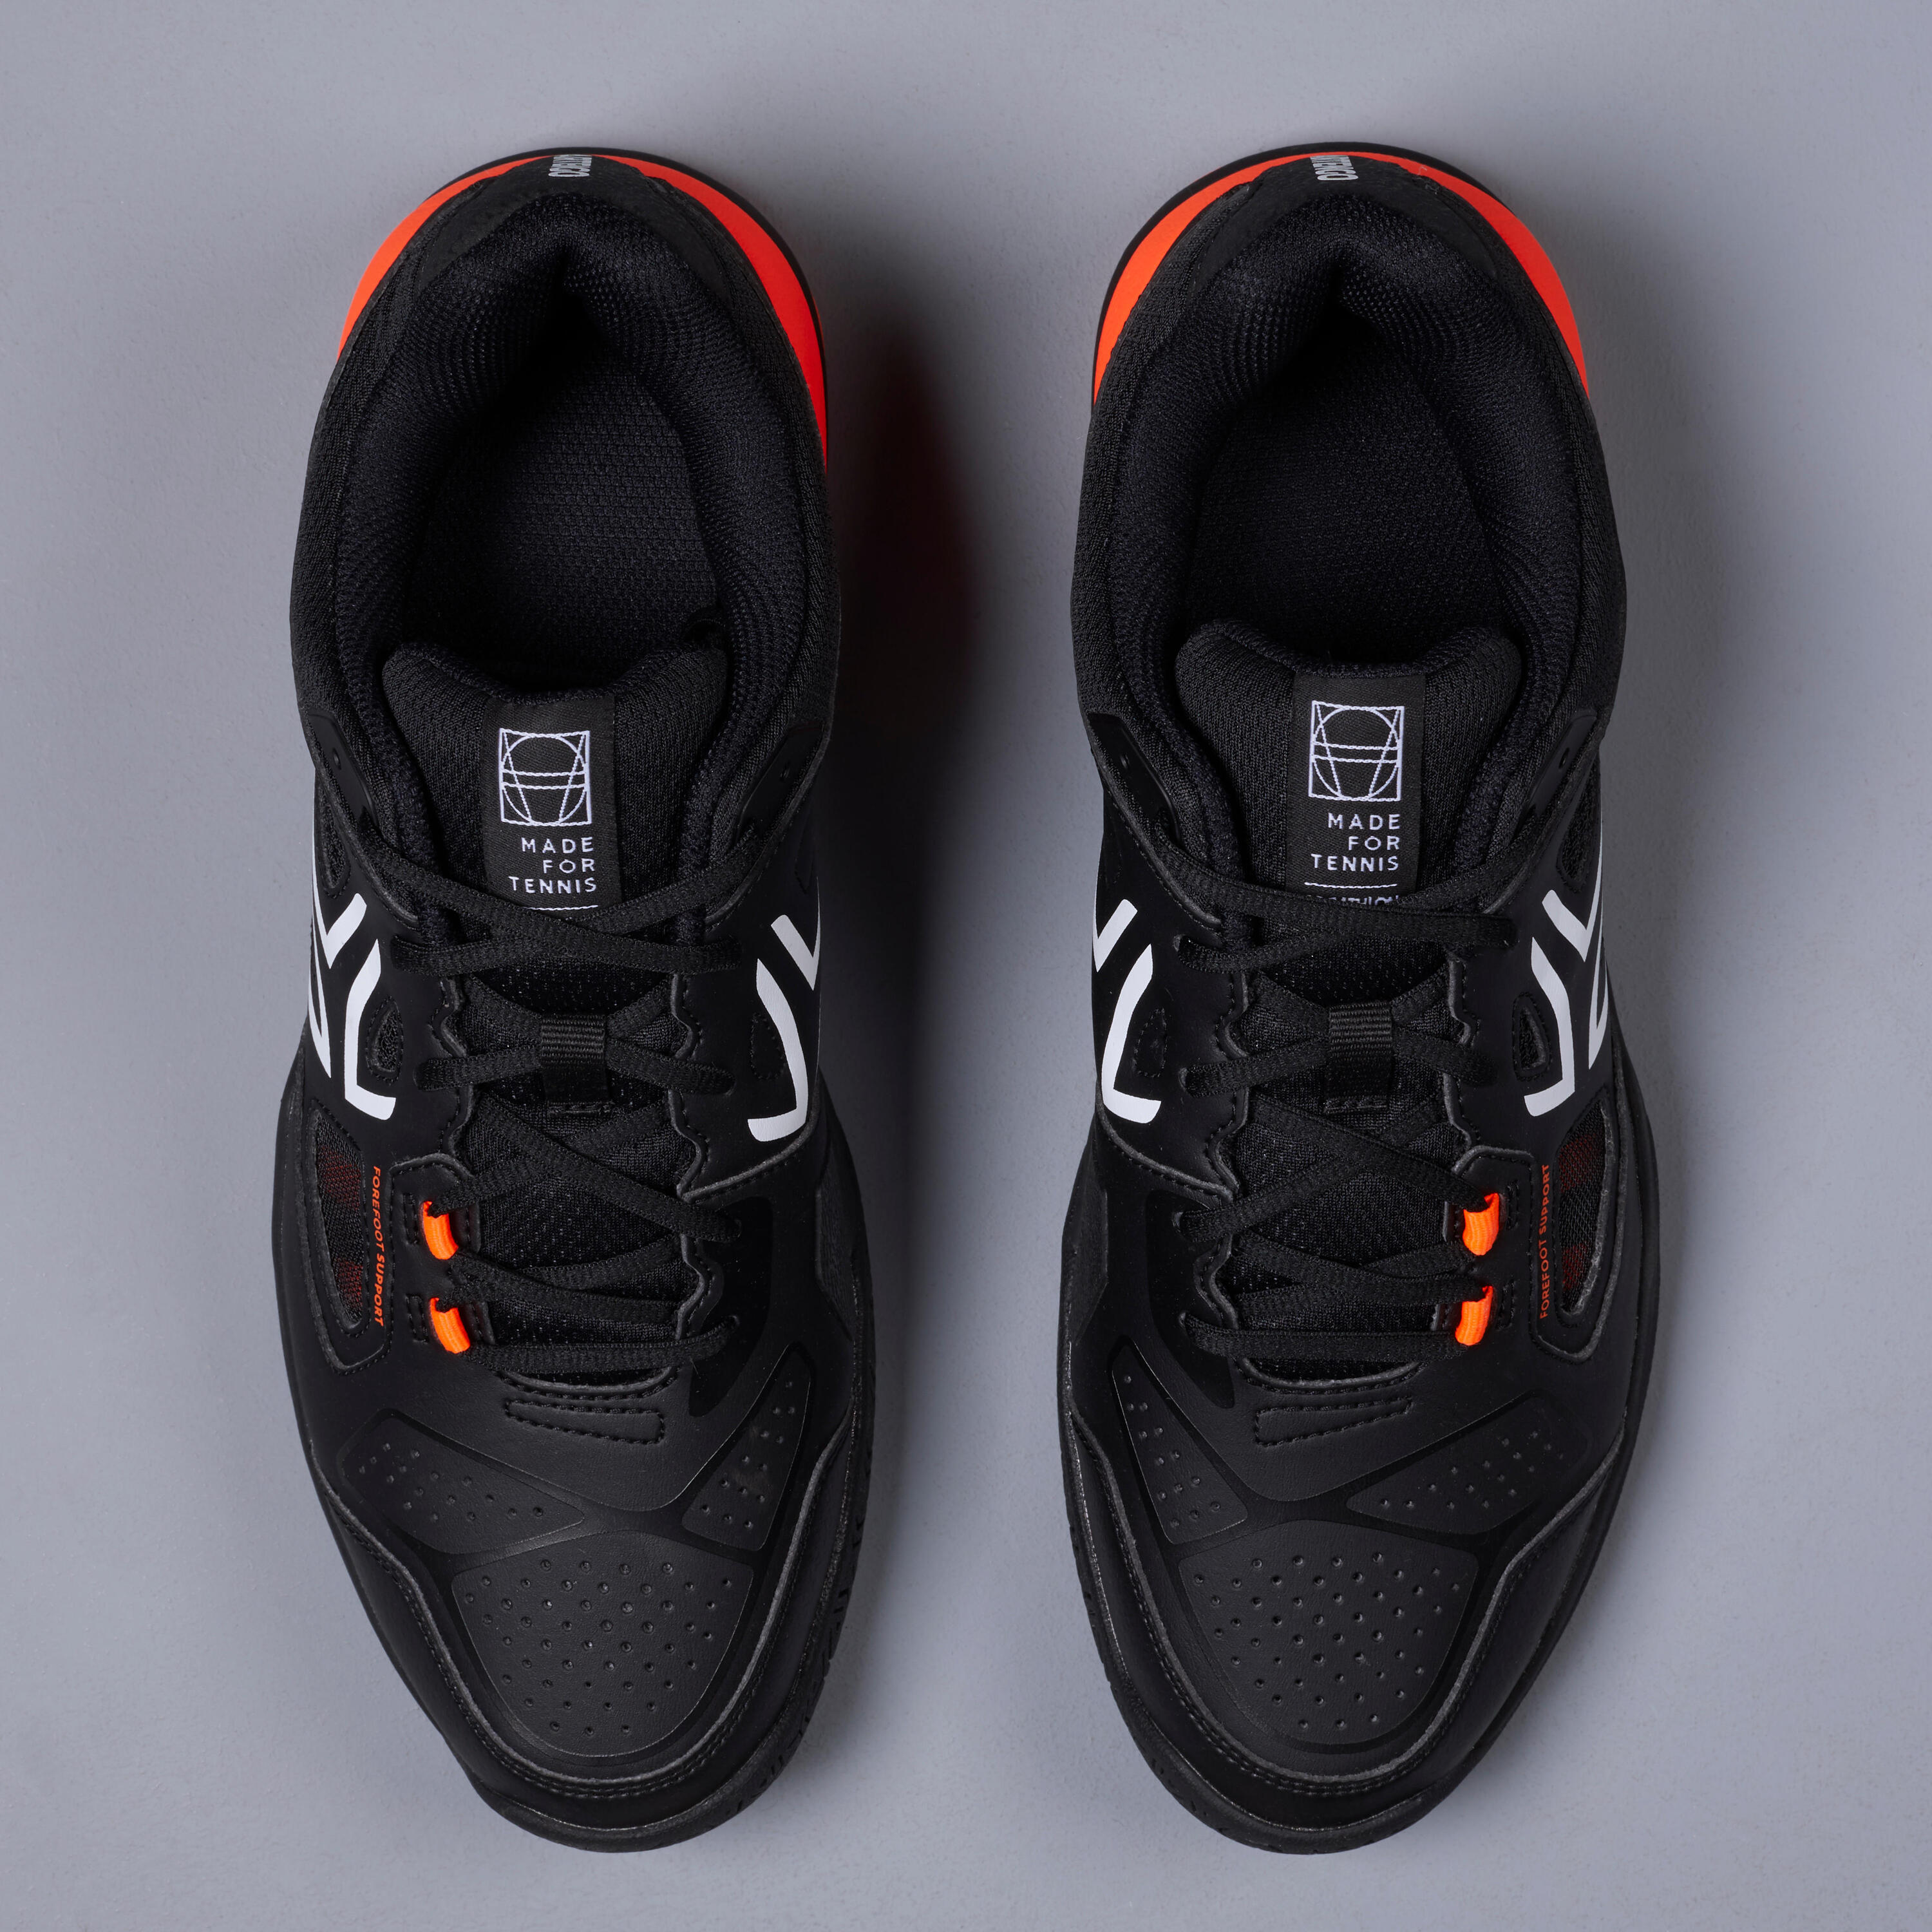 TS500 Multicourt Tennis Shoes - Black/Orange 5/8